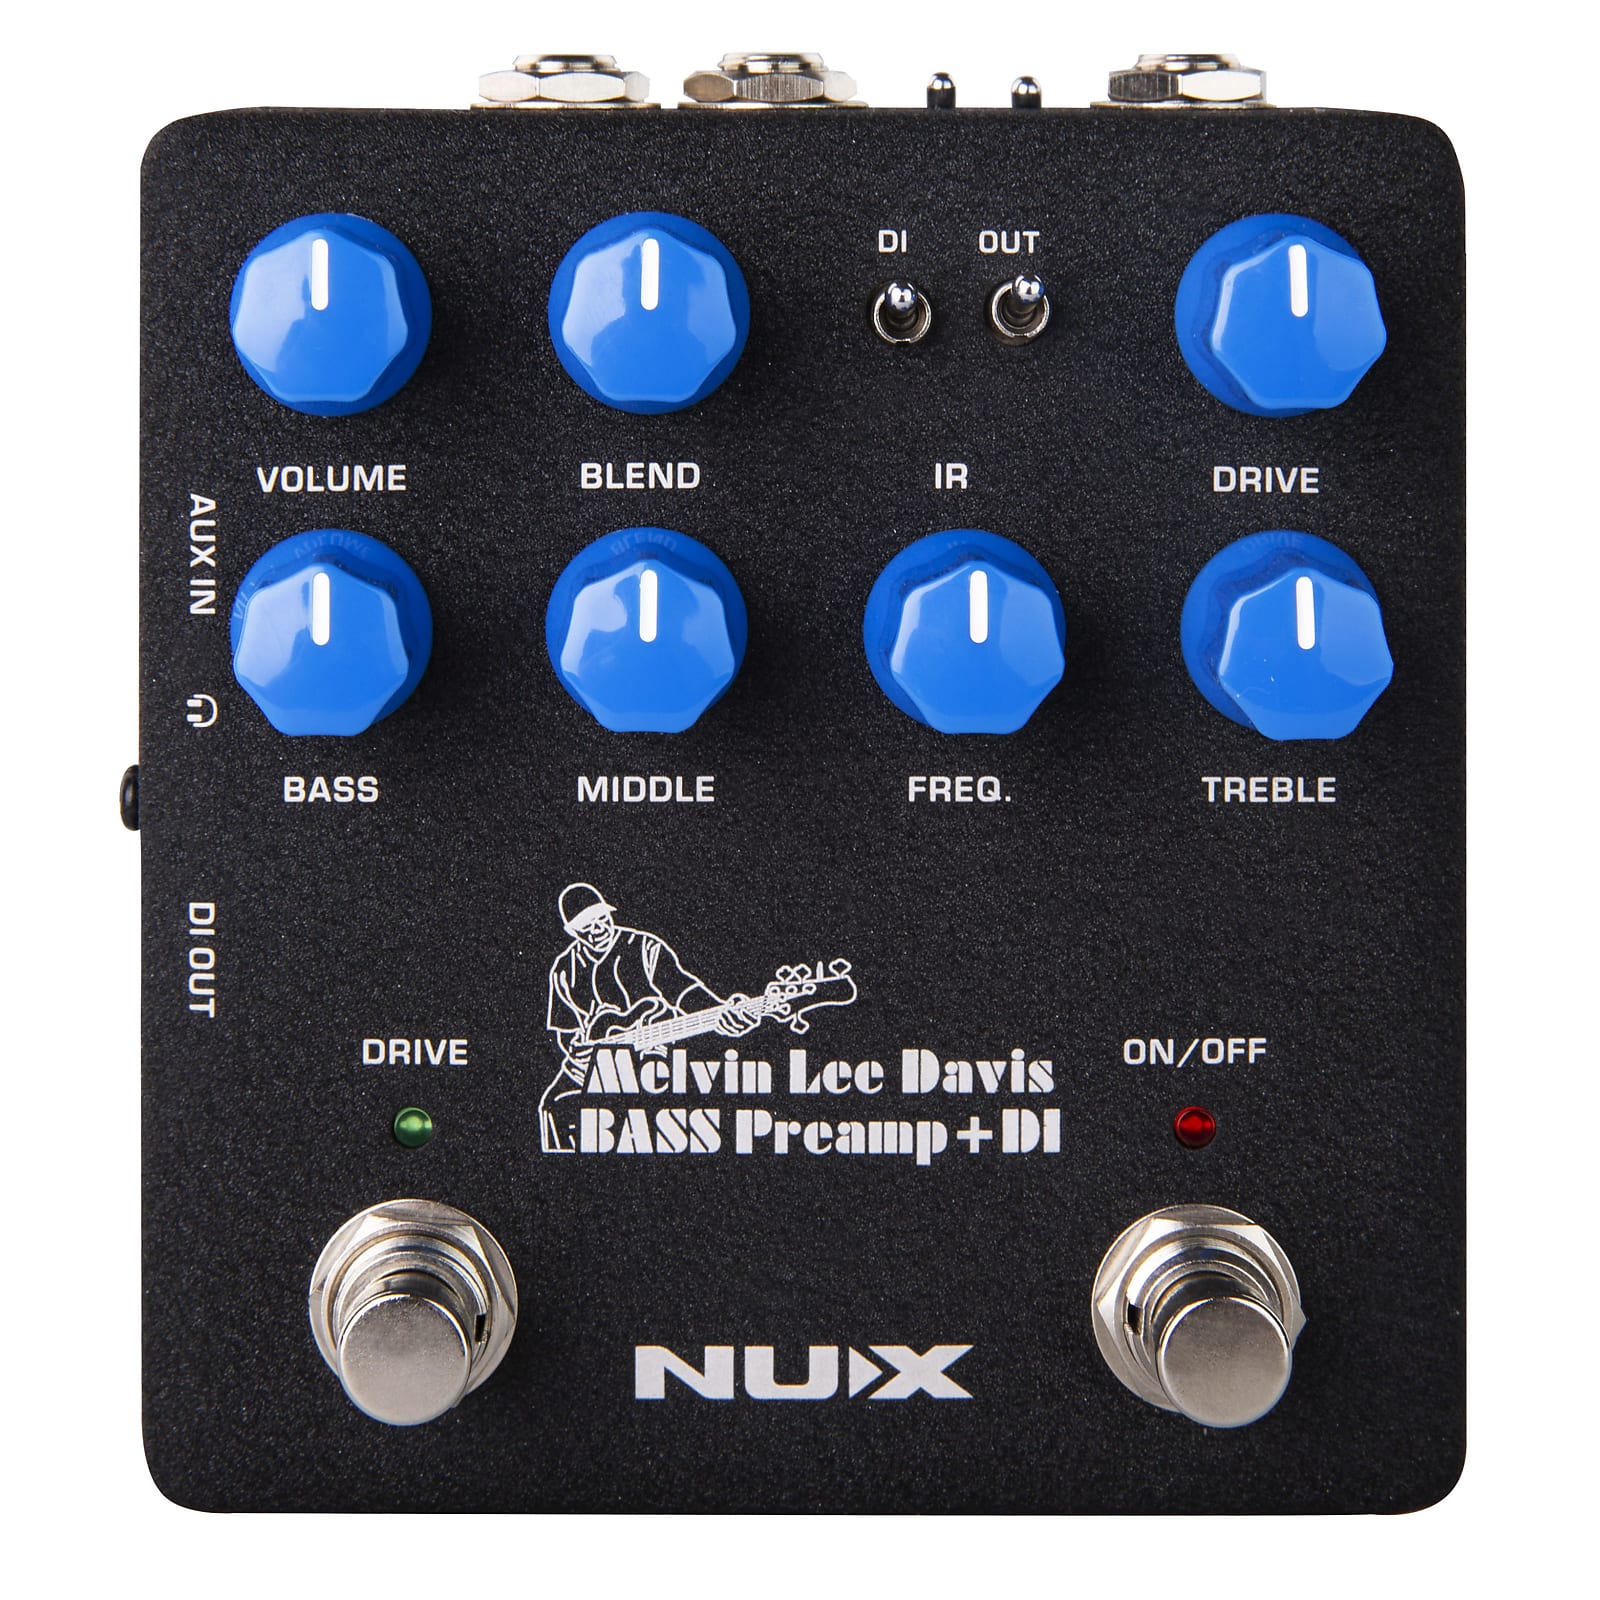 NuX NBP-5 Melvin Lee Davis Bass Preamp DI Verdugo Series Effects Pedal